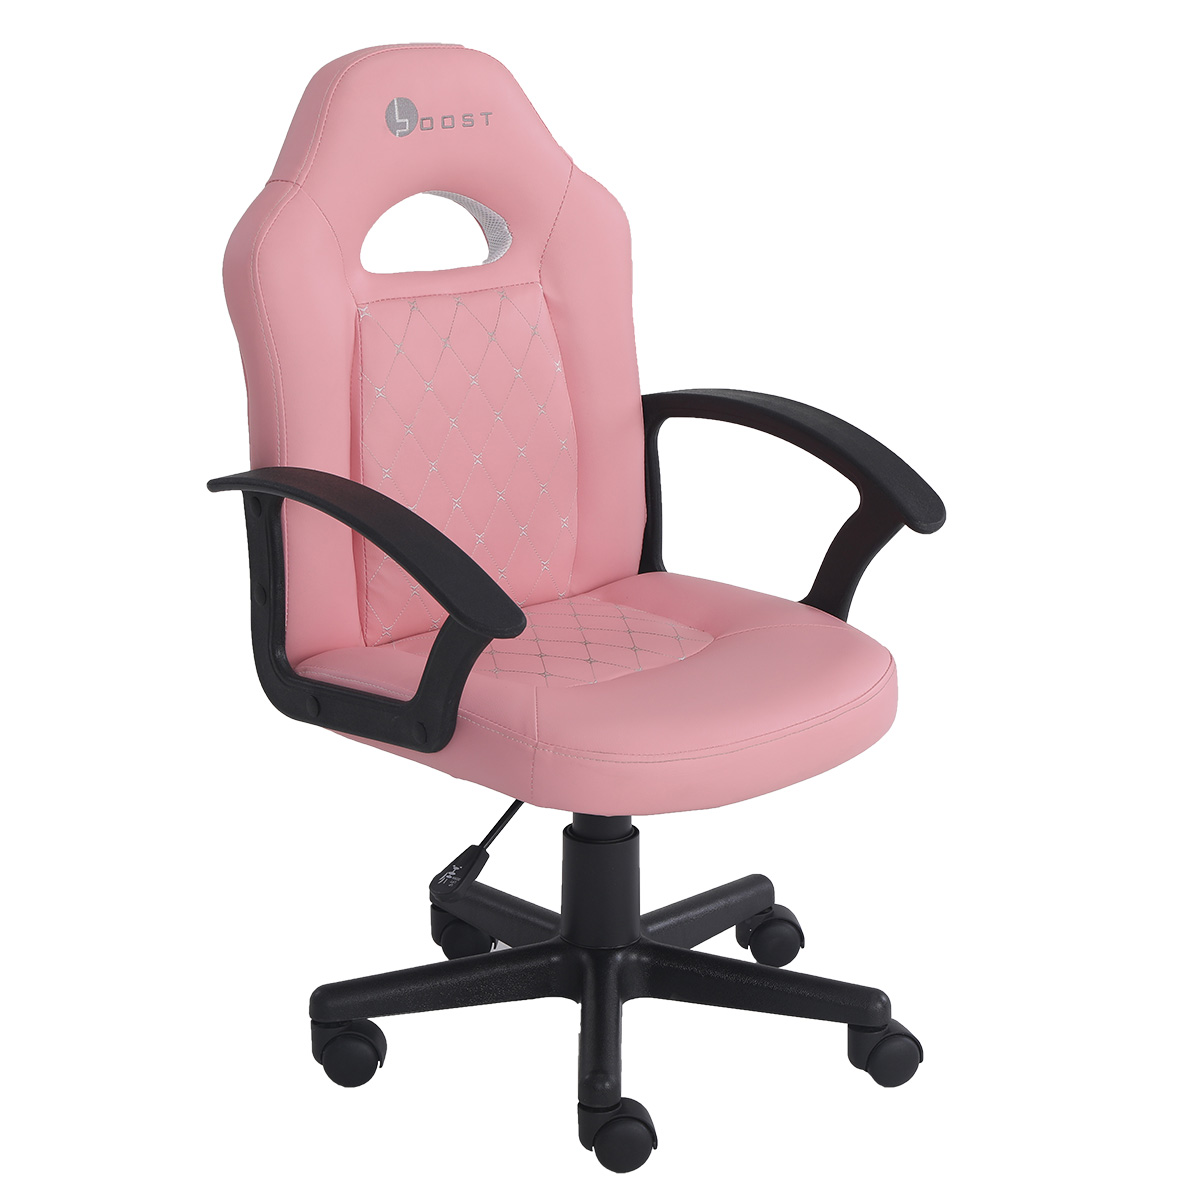 KC375 Children’s Gaming / Desk Chair (Pink)